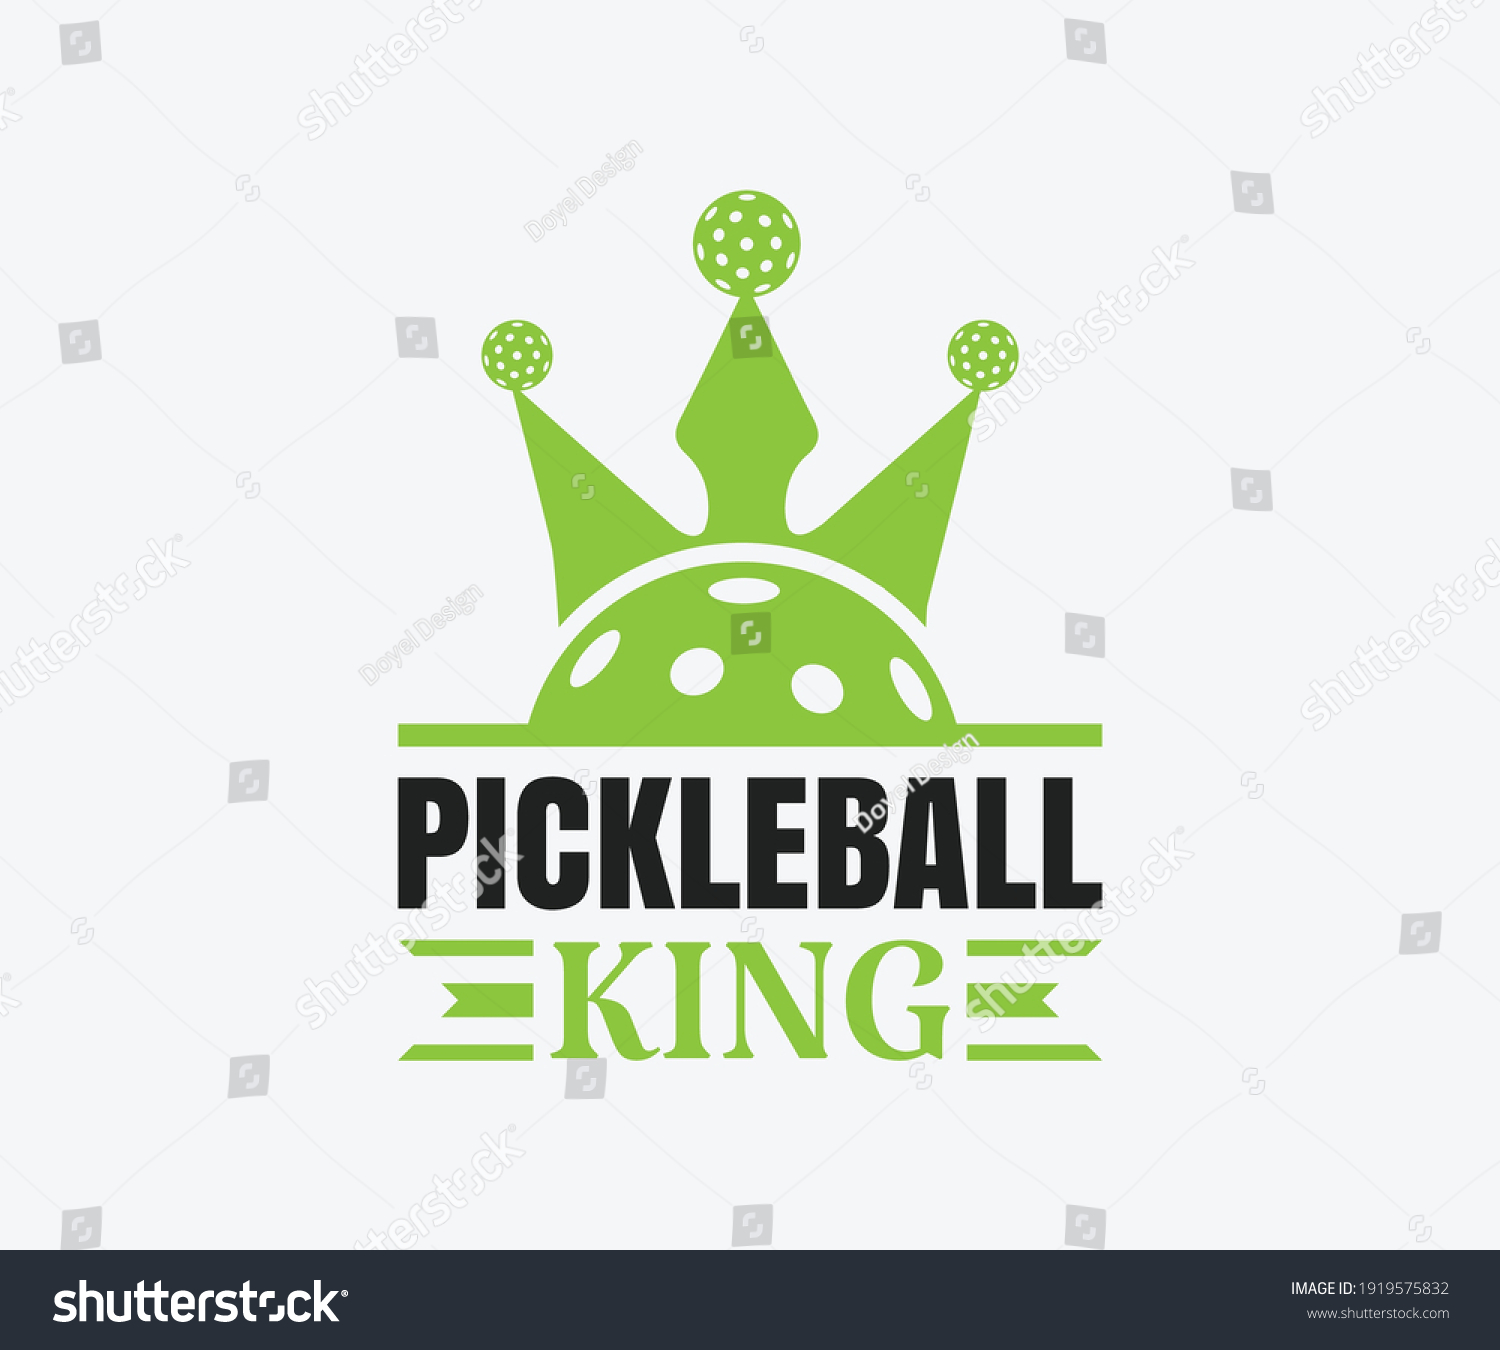 SVG of Pickleball King, Printable Vector Illustration. Pickleball SVG. Great for badge t-shirt and postcard designs. Vector graphic illustration. svg